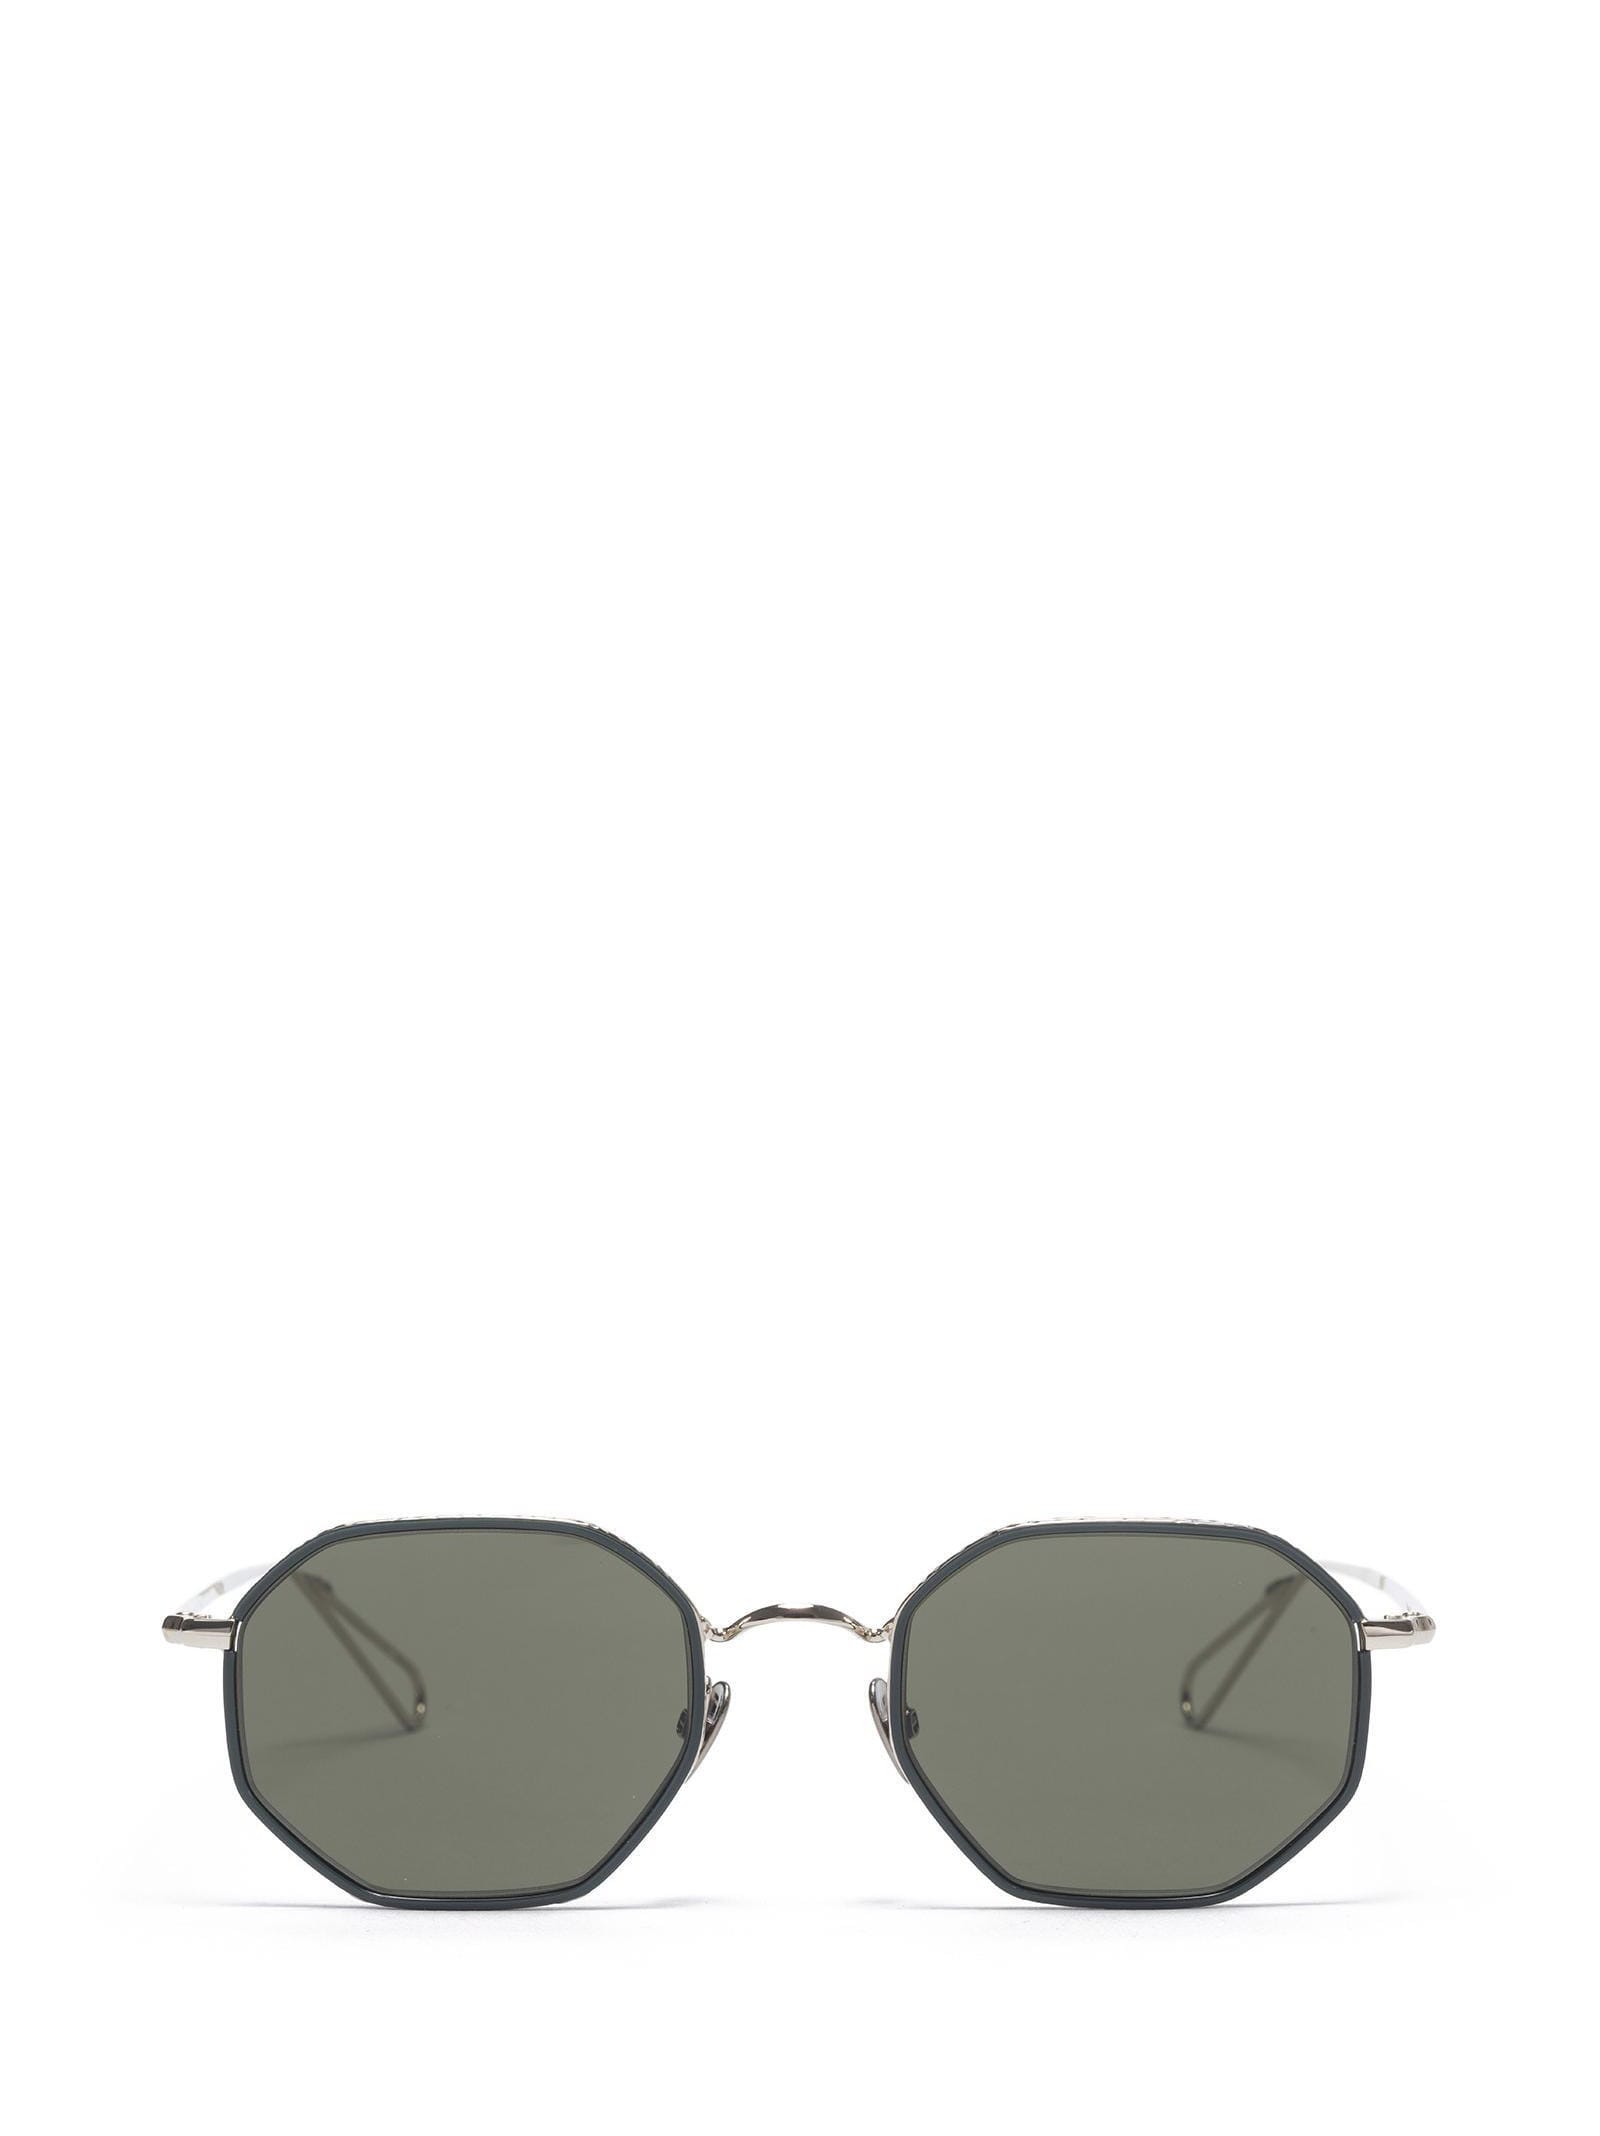 AHLEM Ahlem Luxembourg Grey Gold/ Green Windsor Sunglasses